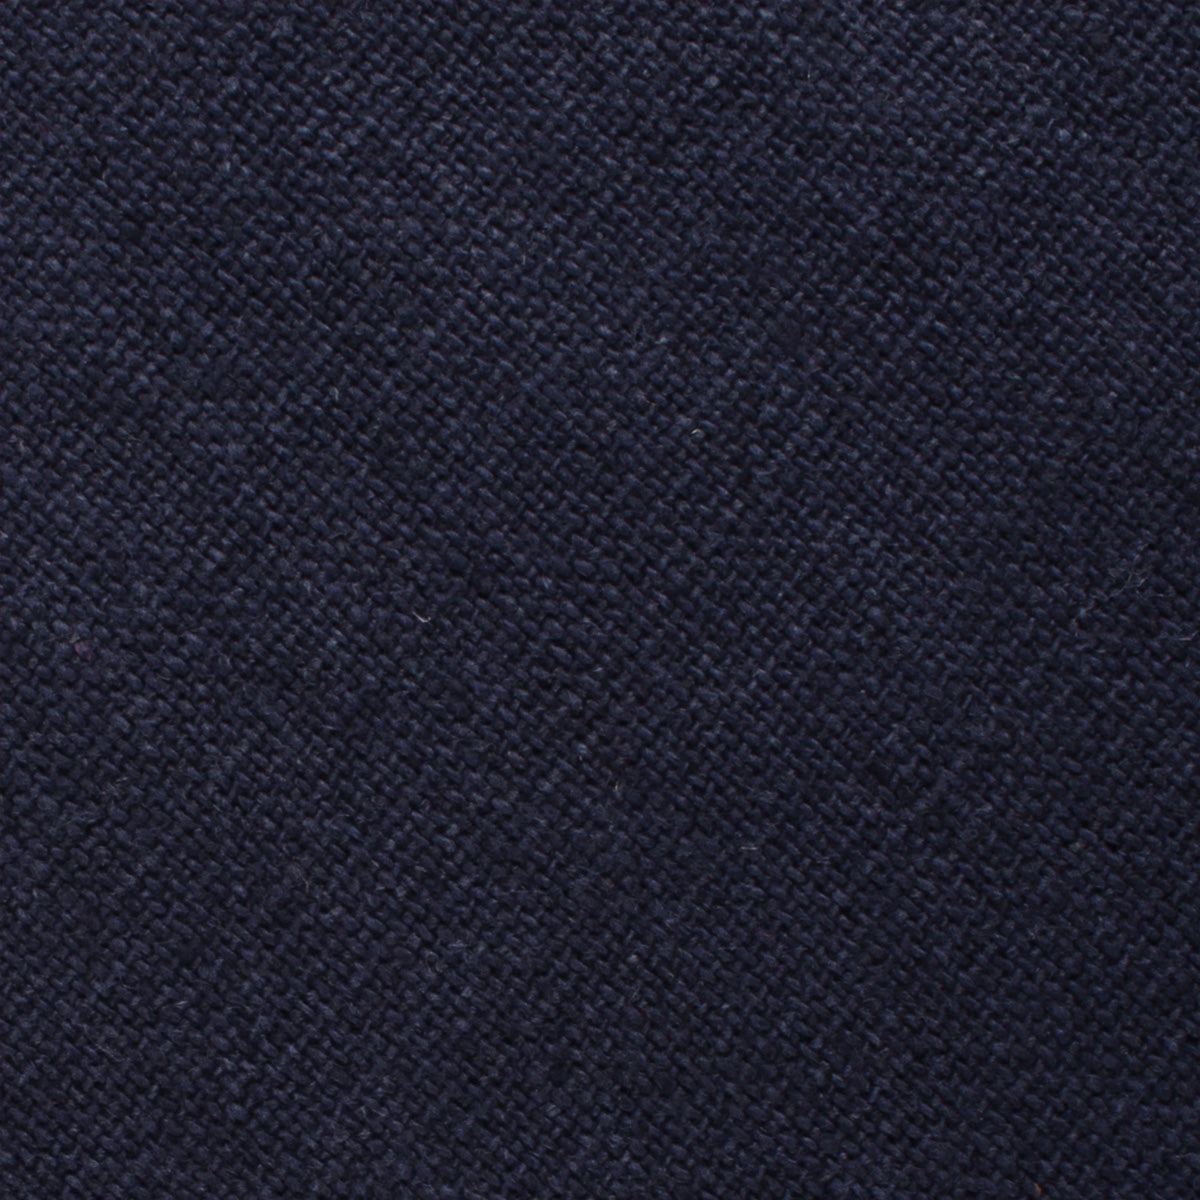 Baltic Sea Midnight Blue Linen Self Bow Tie Fabric